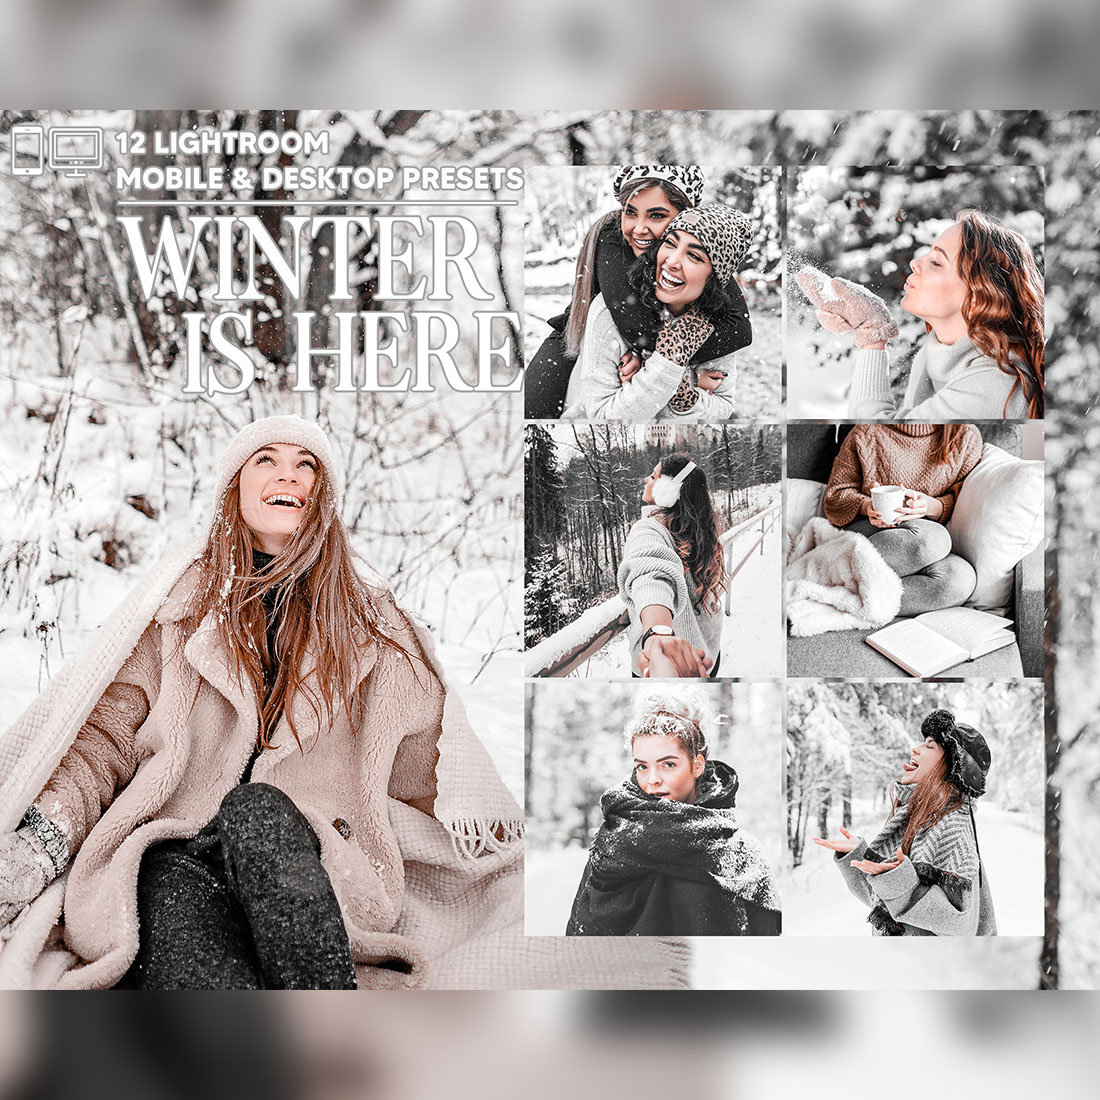 12 Winter Is Here Lightroom Presets, Clean Mobile Preset, Christmas Desktop LR Lifestyle DNG Instagram Bright Filter Theme Portrait Season cover image.